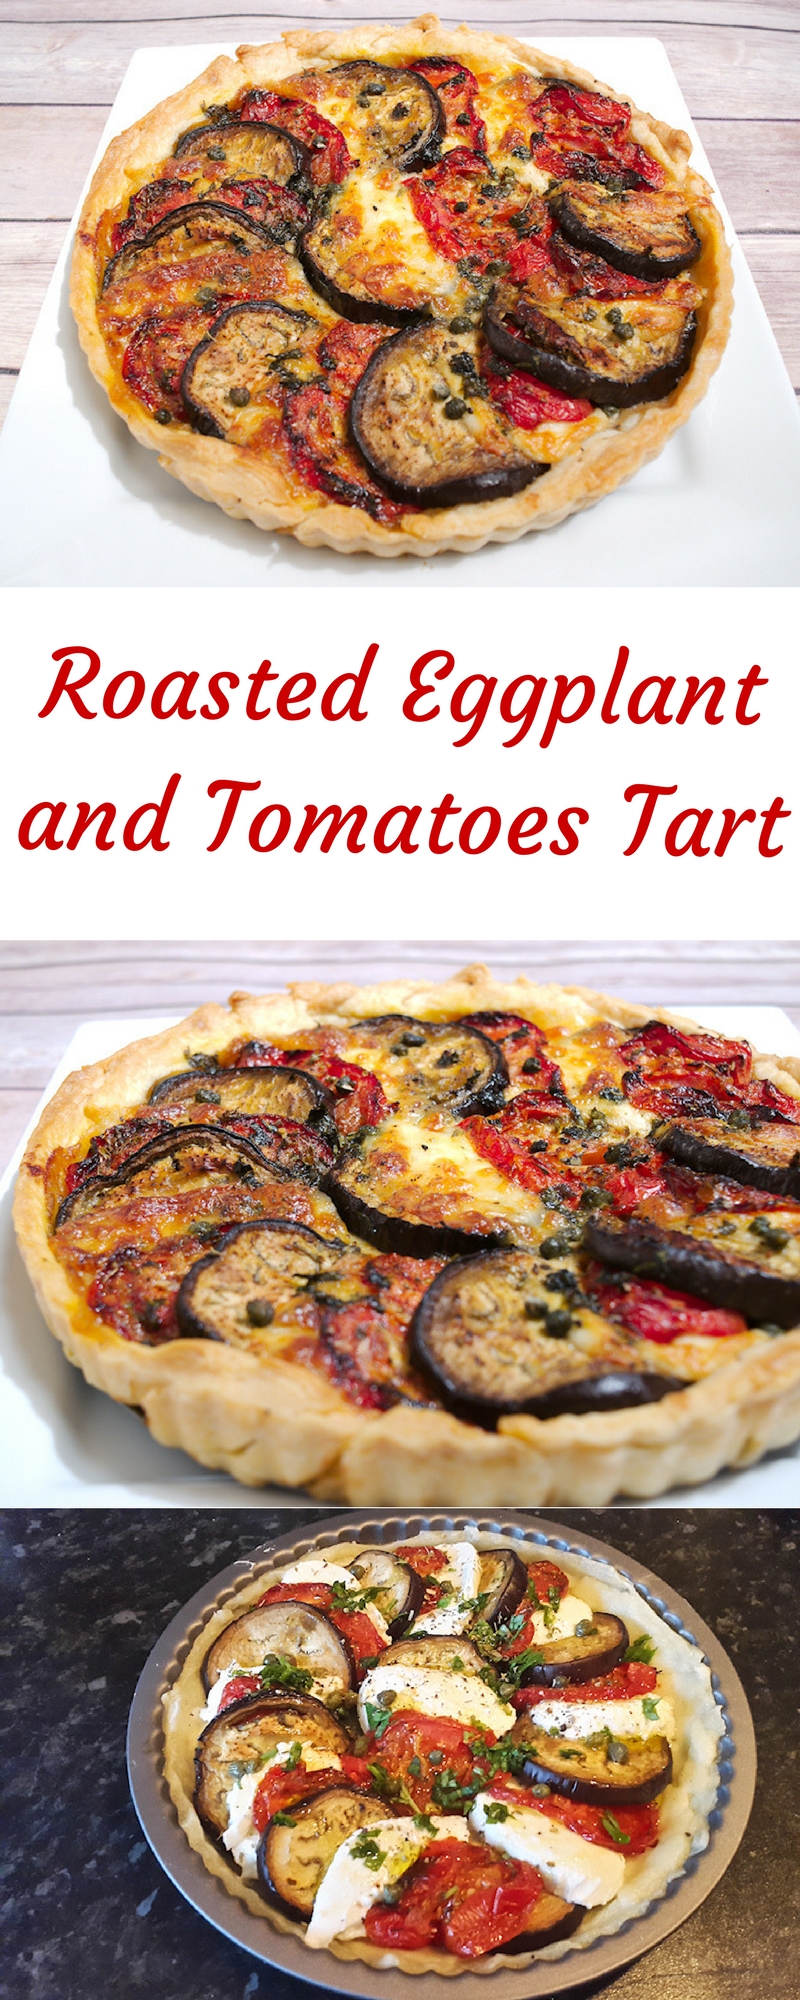 Roasted Eggplant and Tomatoes Tart